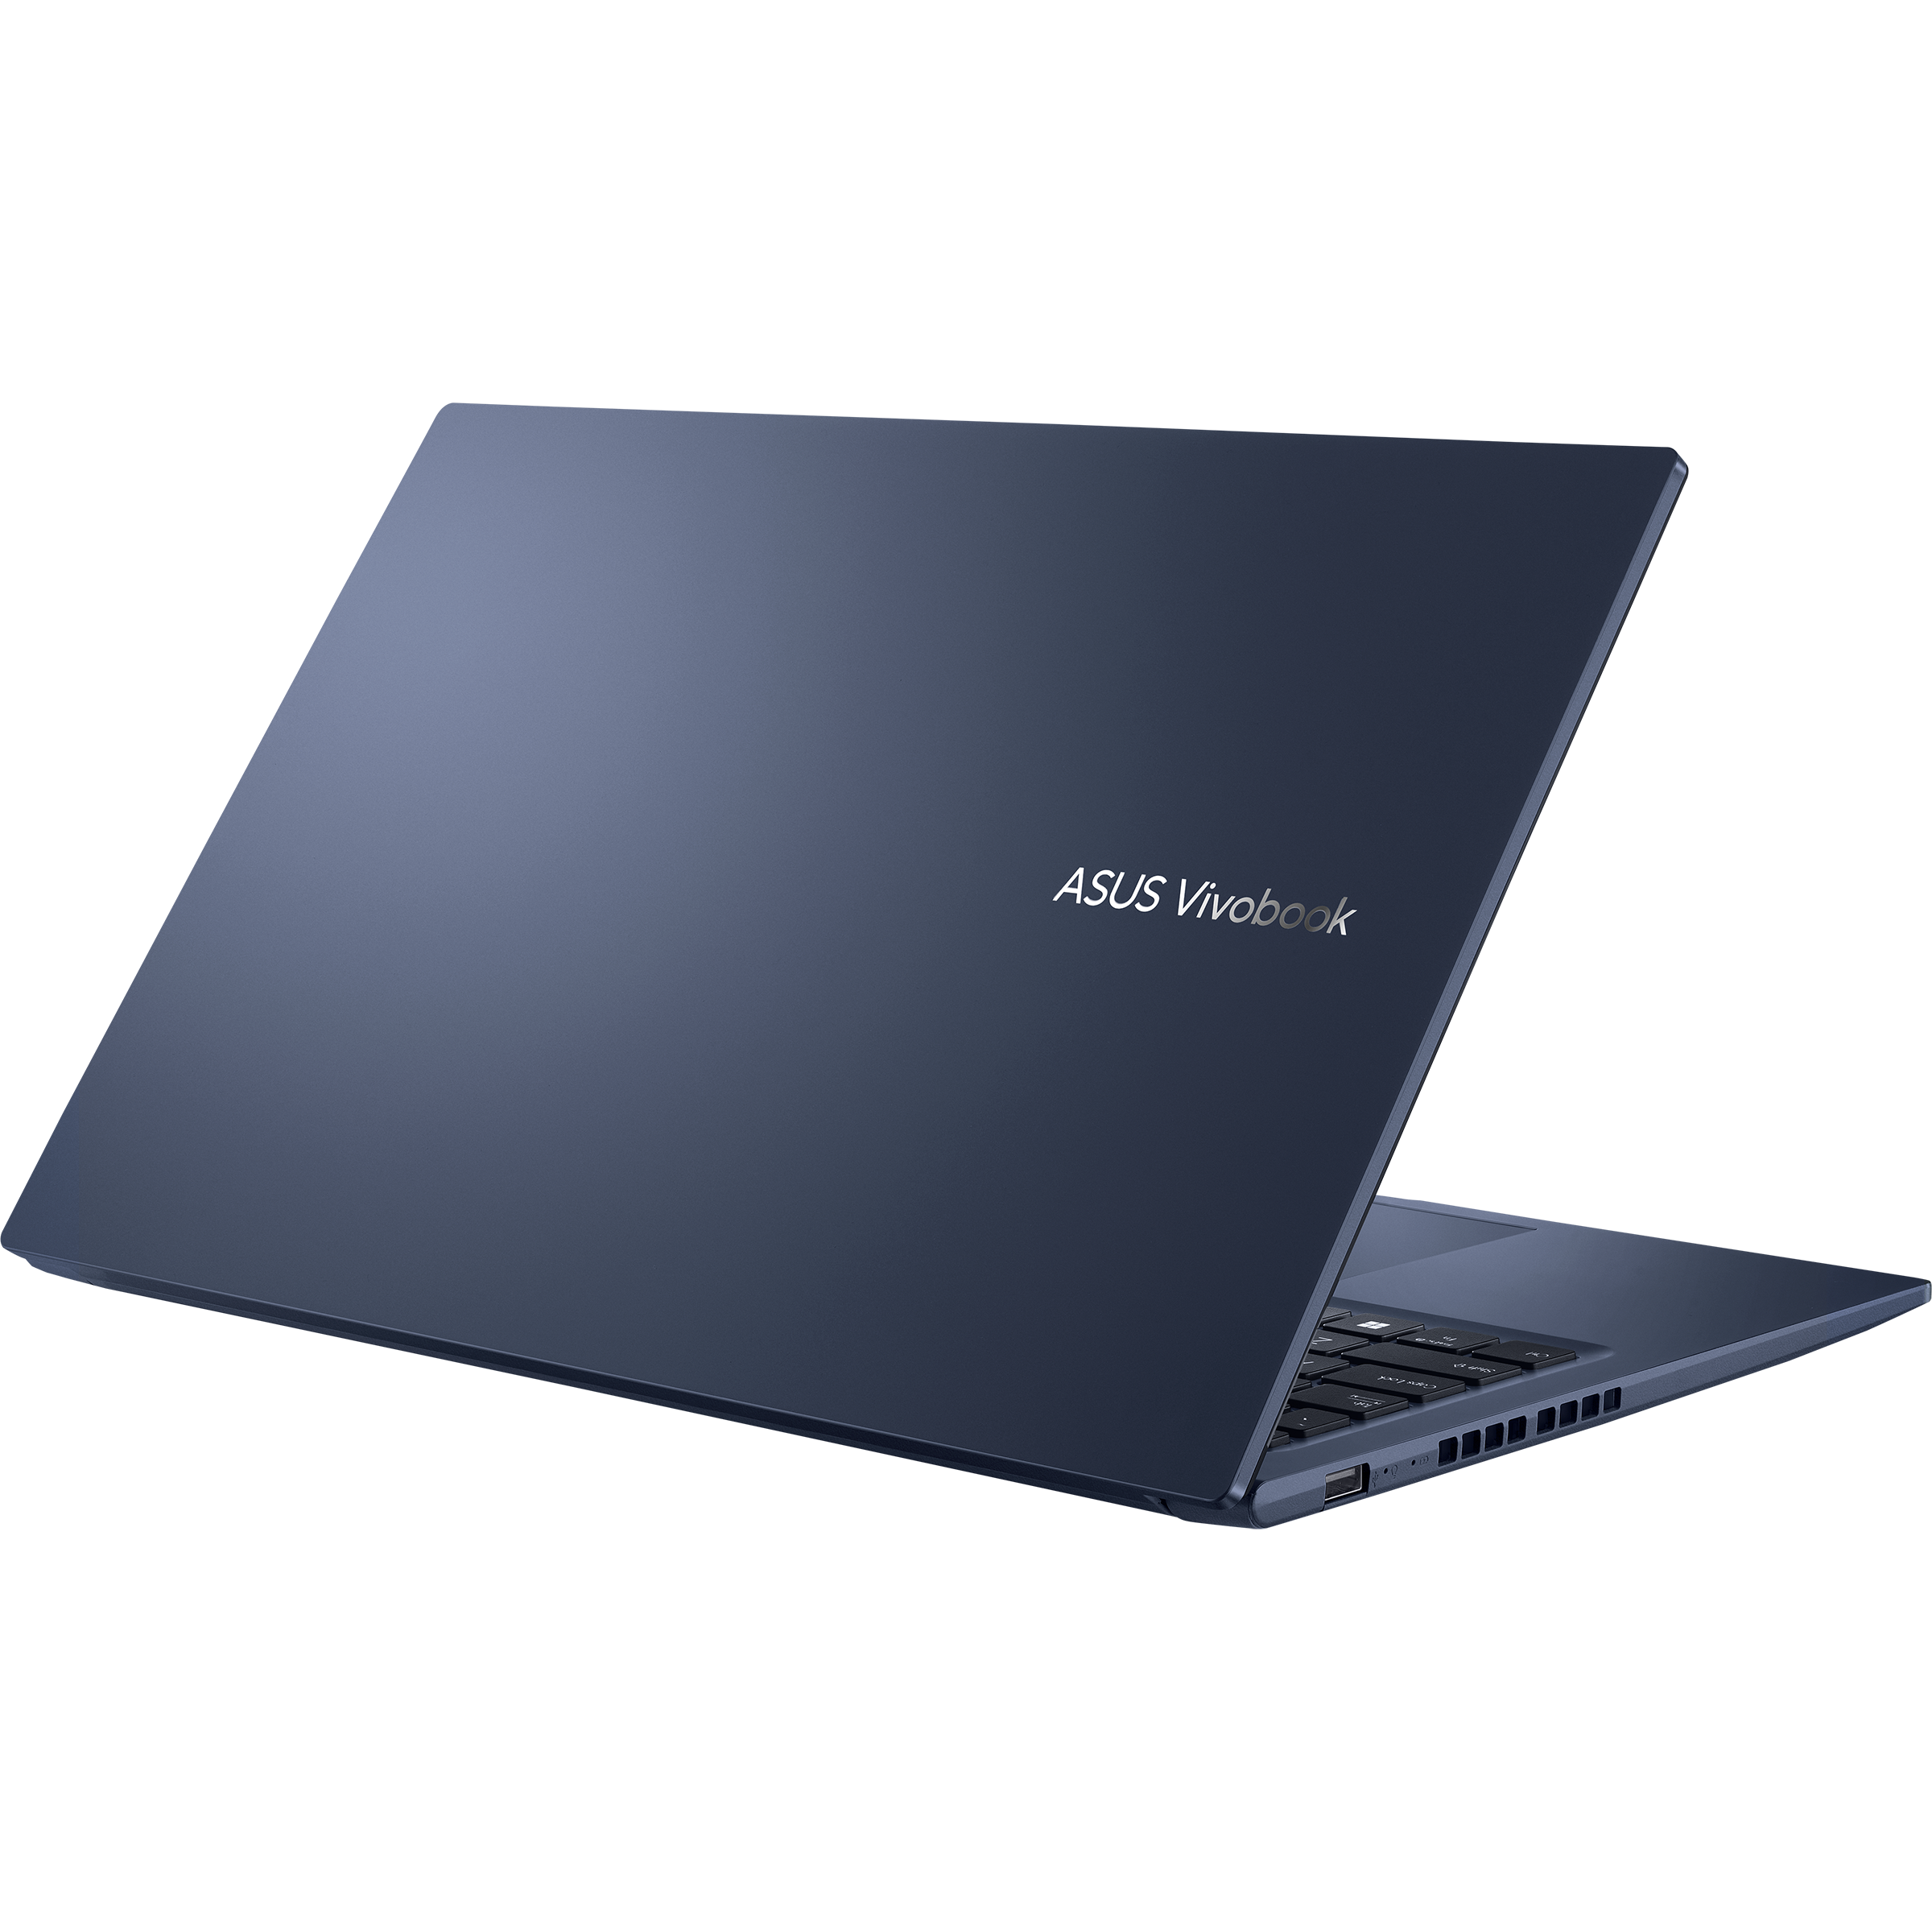 ASUS VivoBook 15 OLED K513 Thin & Light Laptop, 15.6 OLED Display, Intel  i5-1135G7 CPU, Intel Iris Xe Graphics, 12GB RAM, 512GB PCIe SSD,  Fingerprint